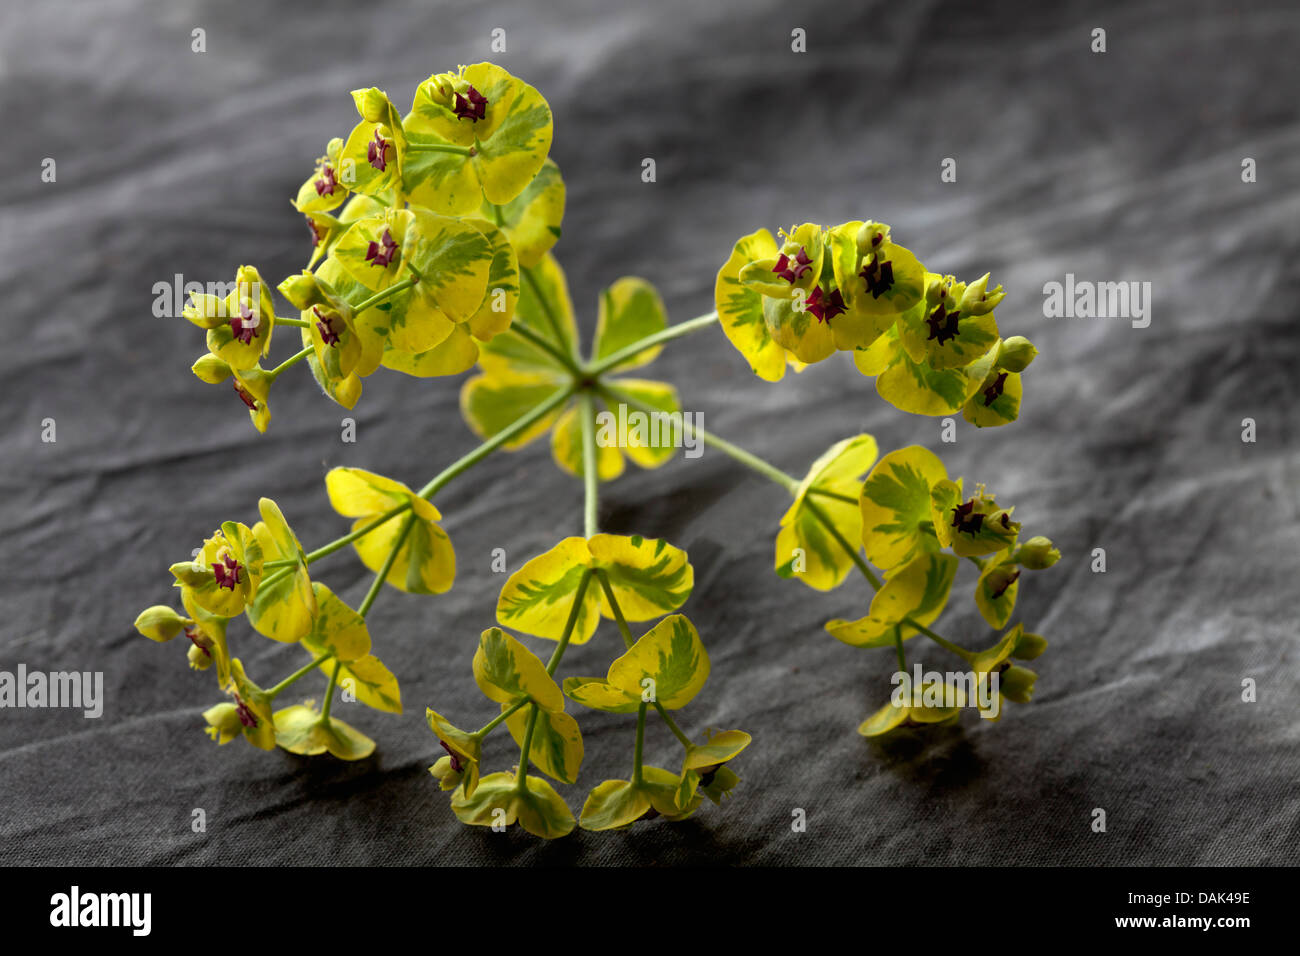 Euphorbia Dendroides on textile, close up Stock Photo